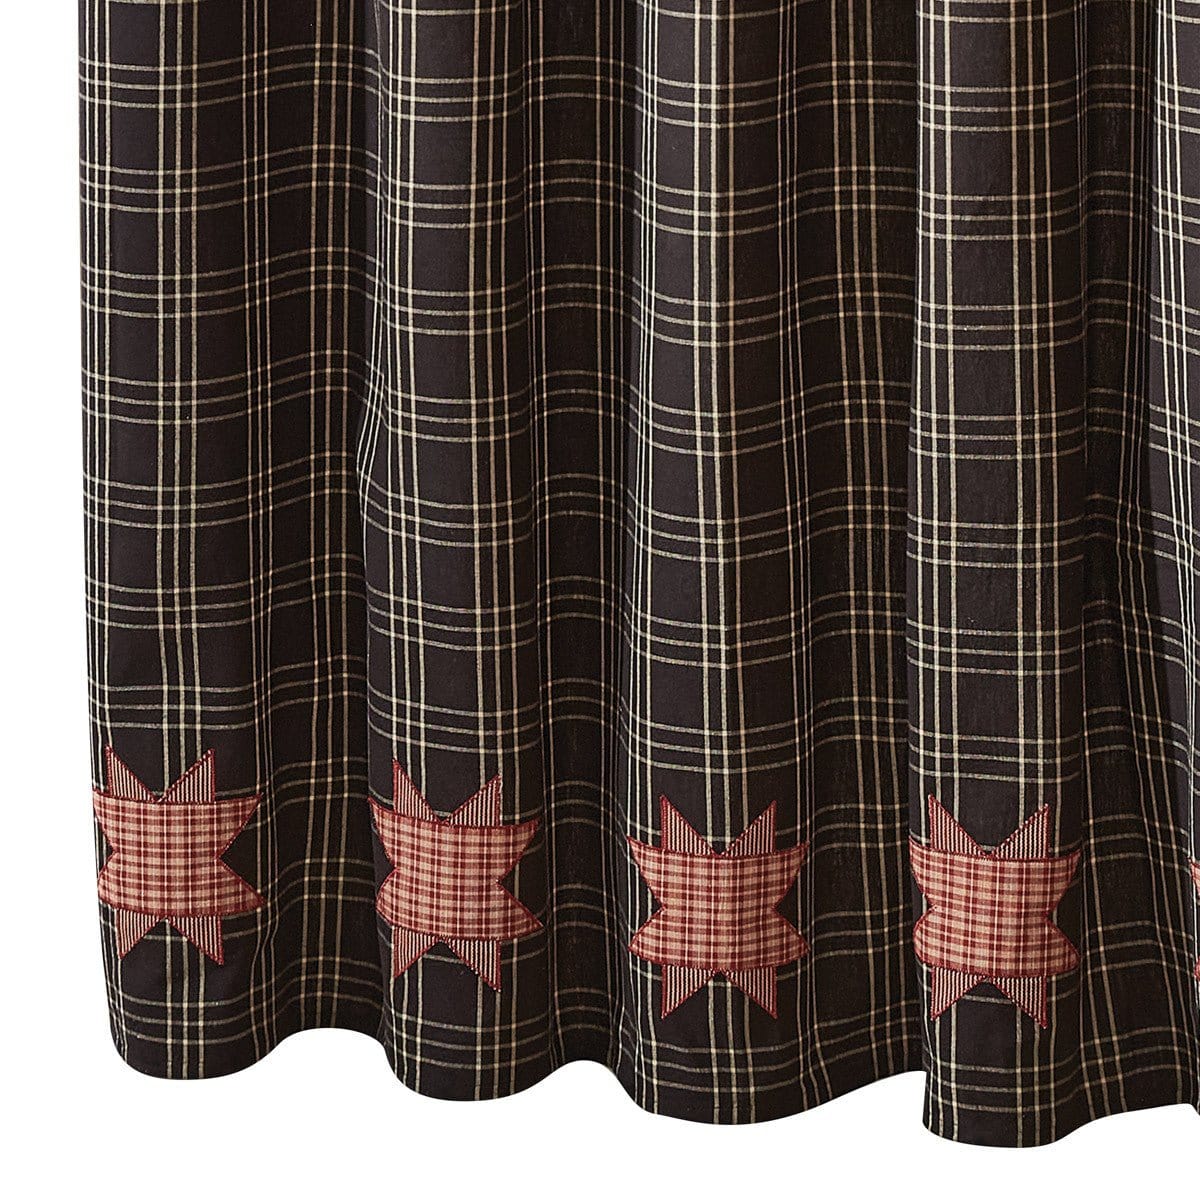 Farmhouse Star Shower Curtain-Park Designs-The Village Merchant